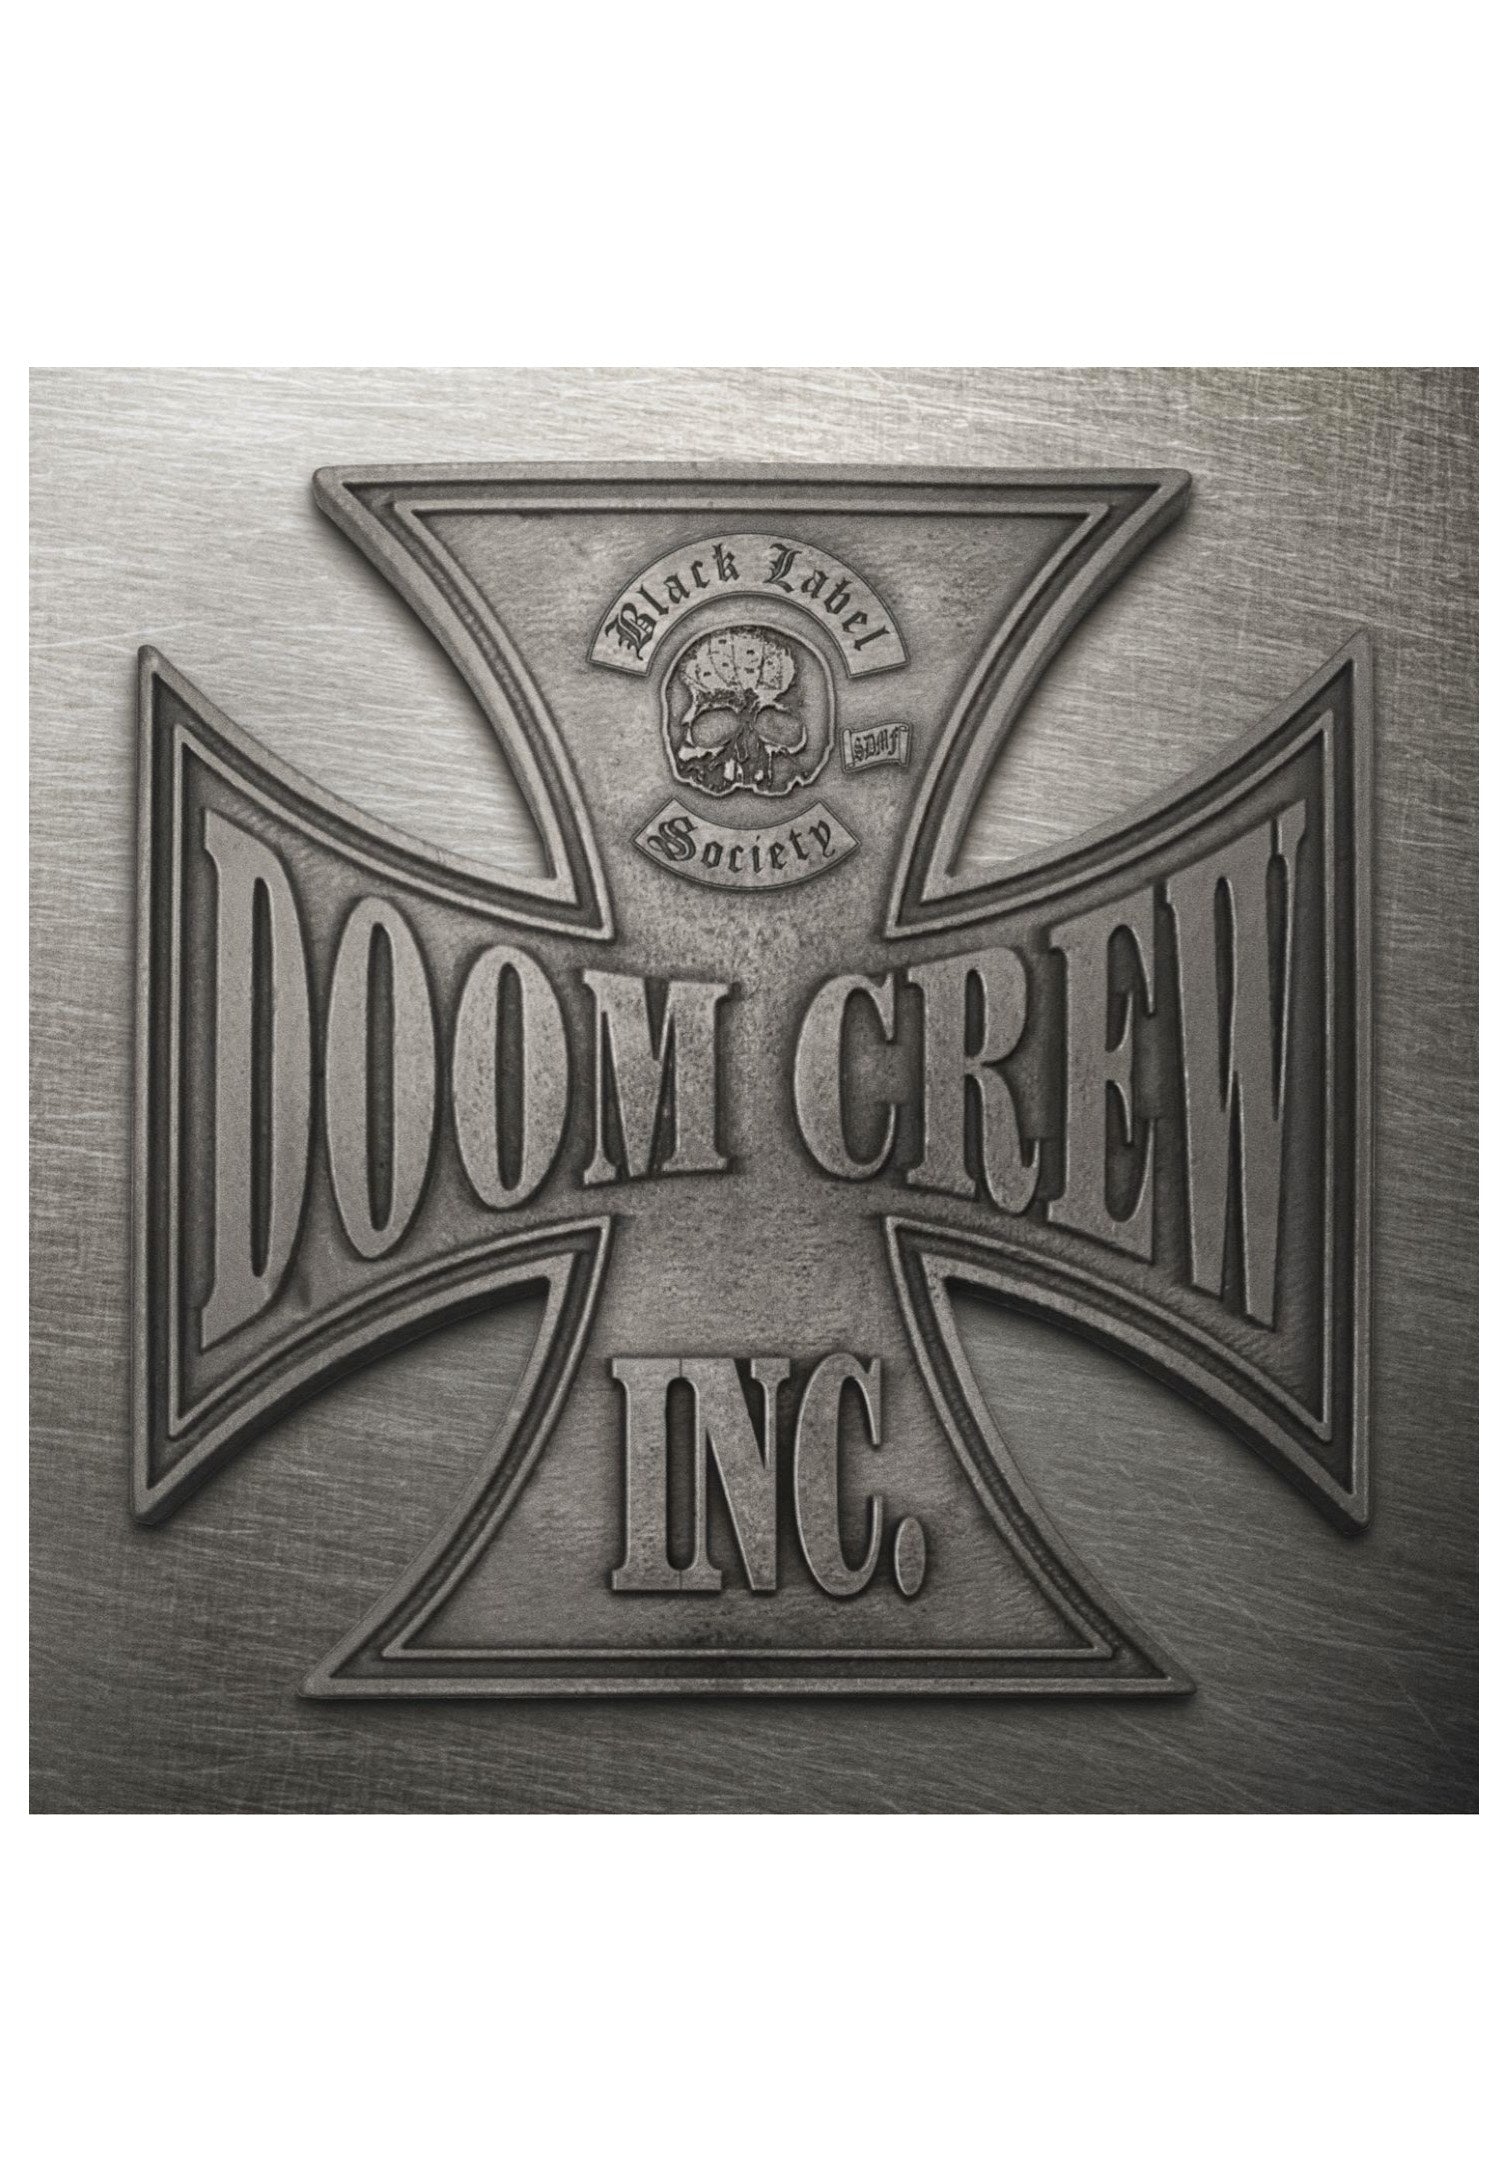 Black Label Society - Doom Crew Inc. - CD